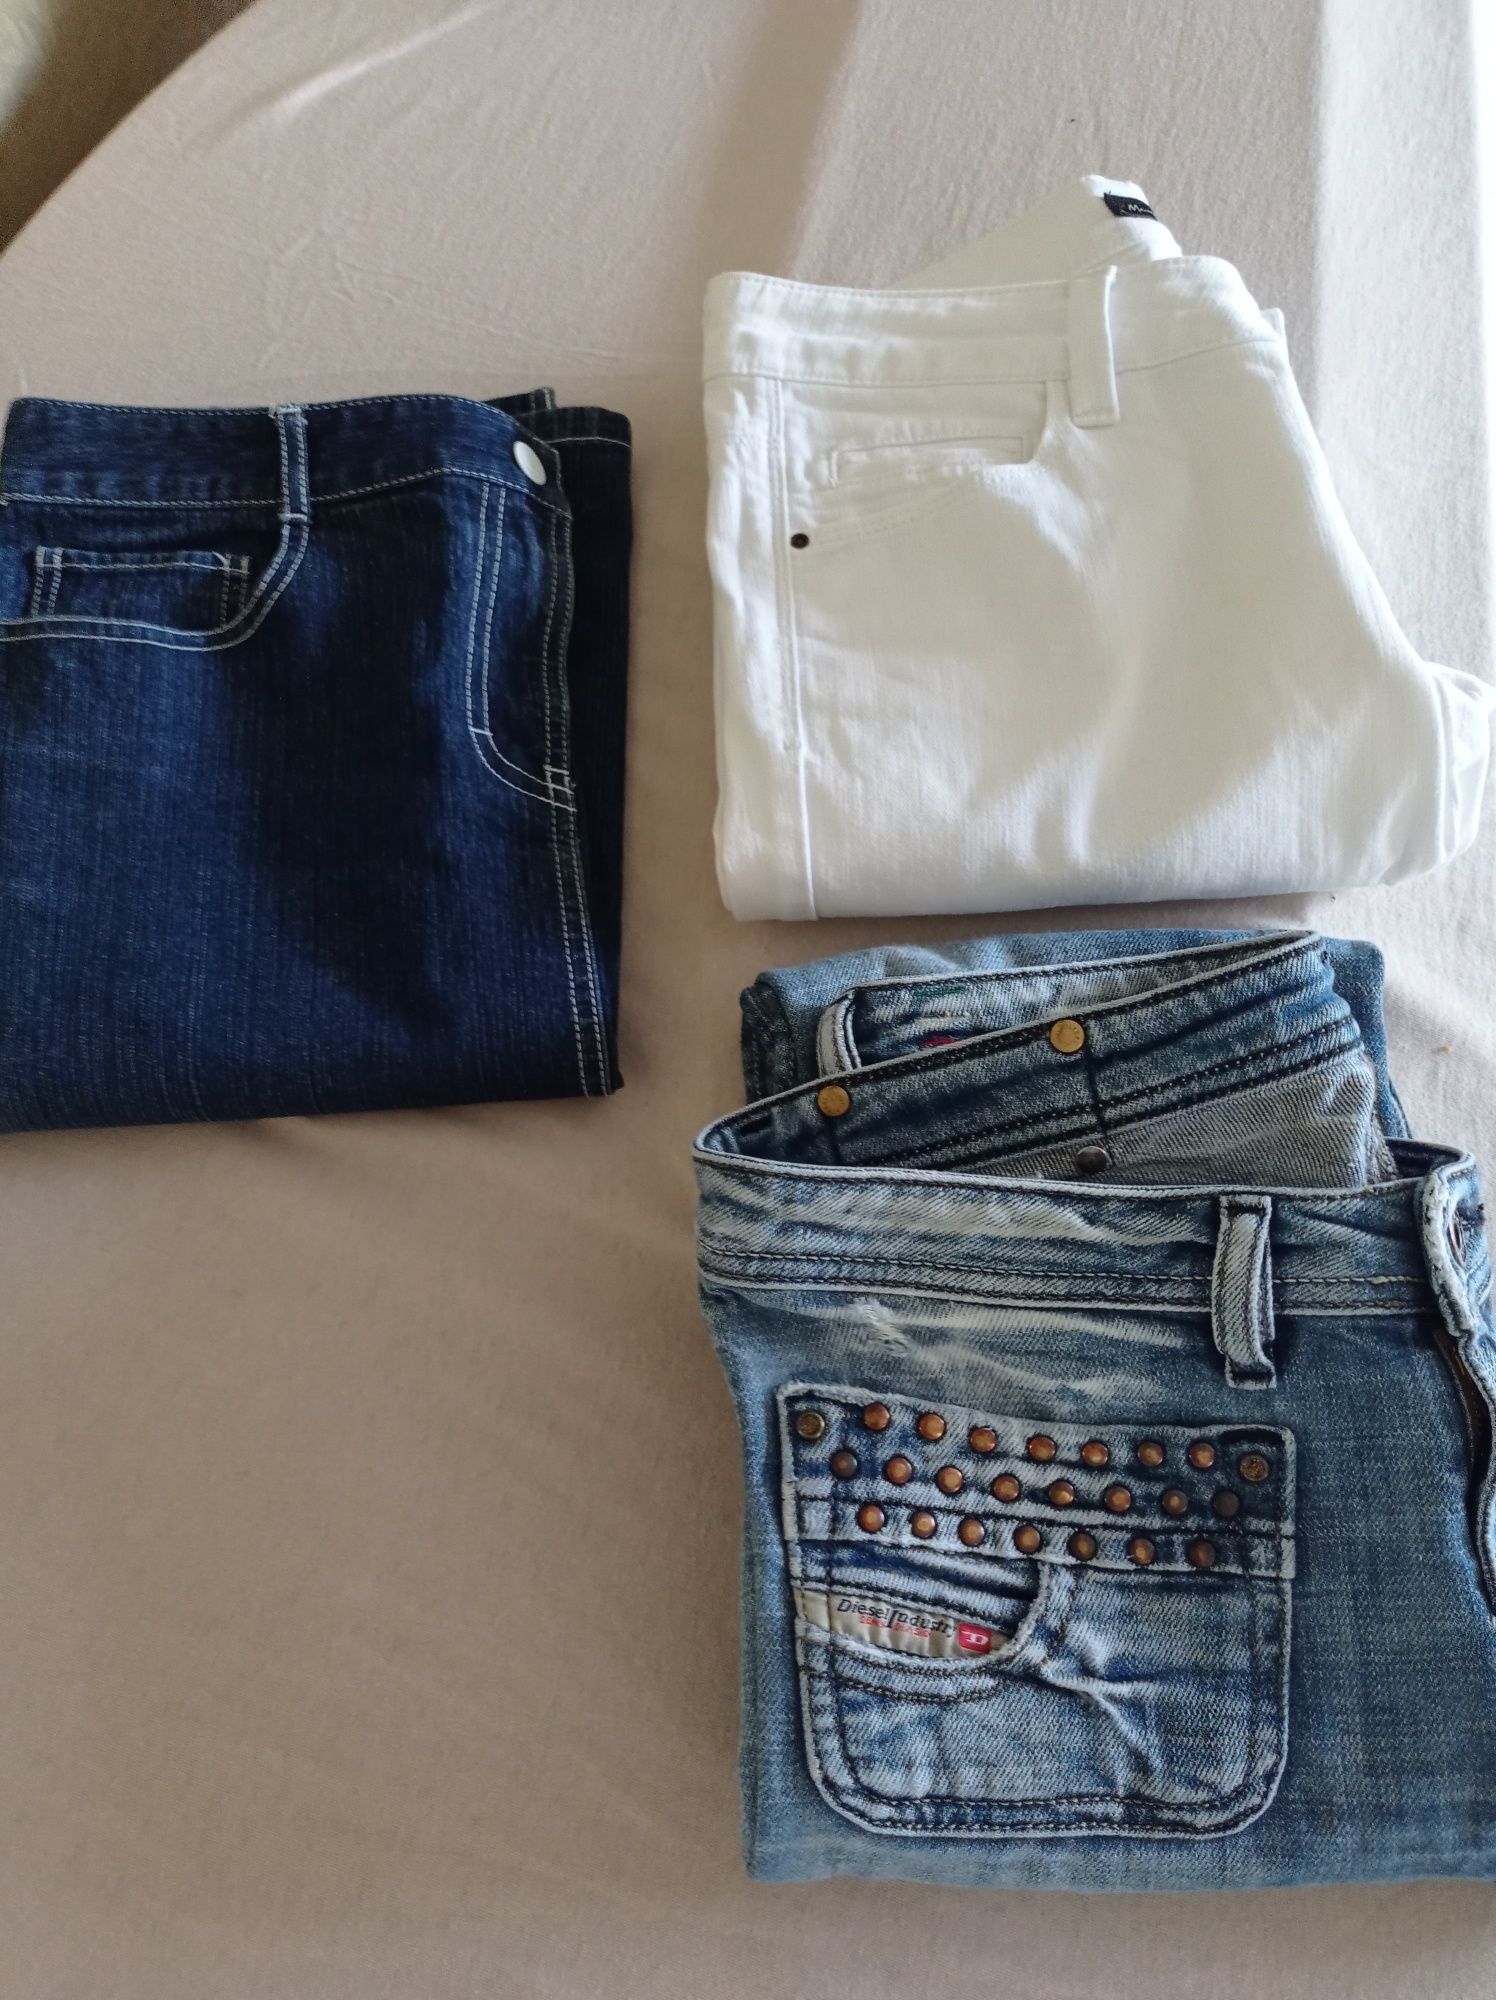 Капри джинсы шорты Massimo Dutti, хлопок, стрейч  Испания. 42-44